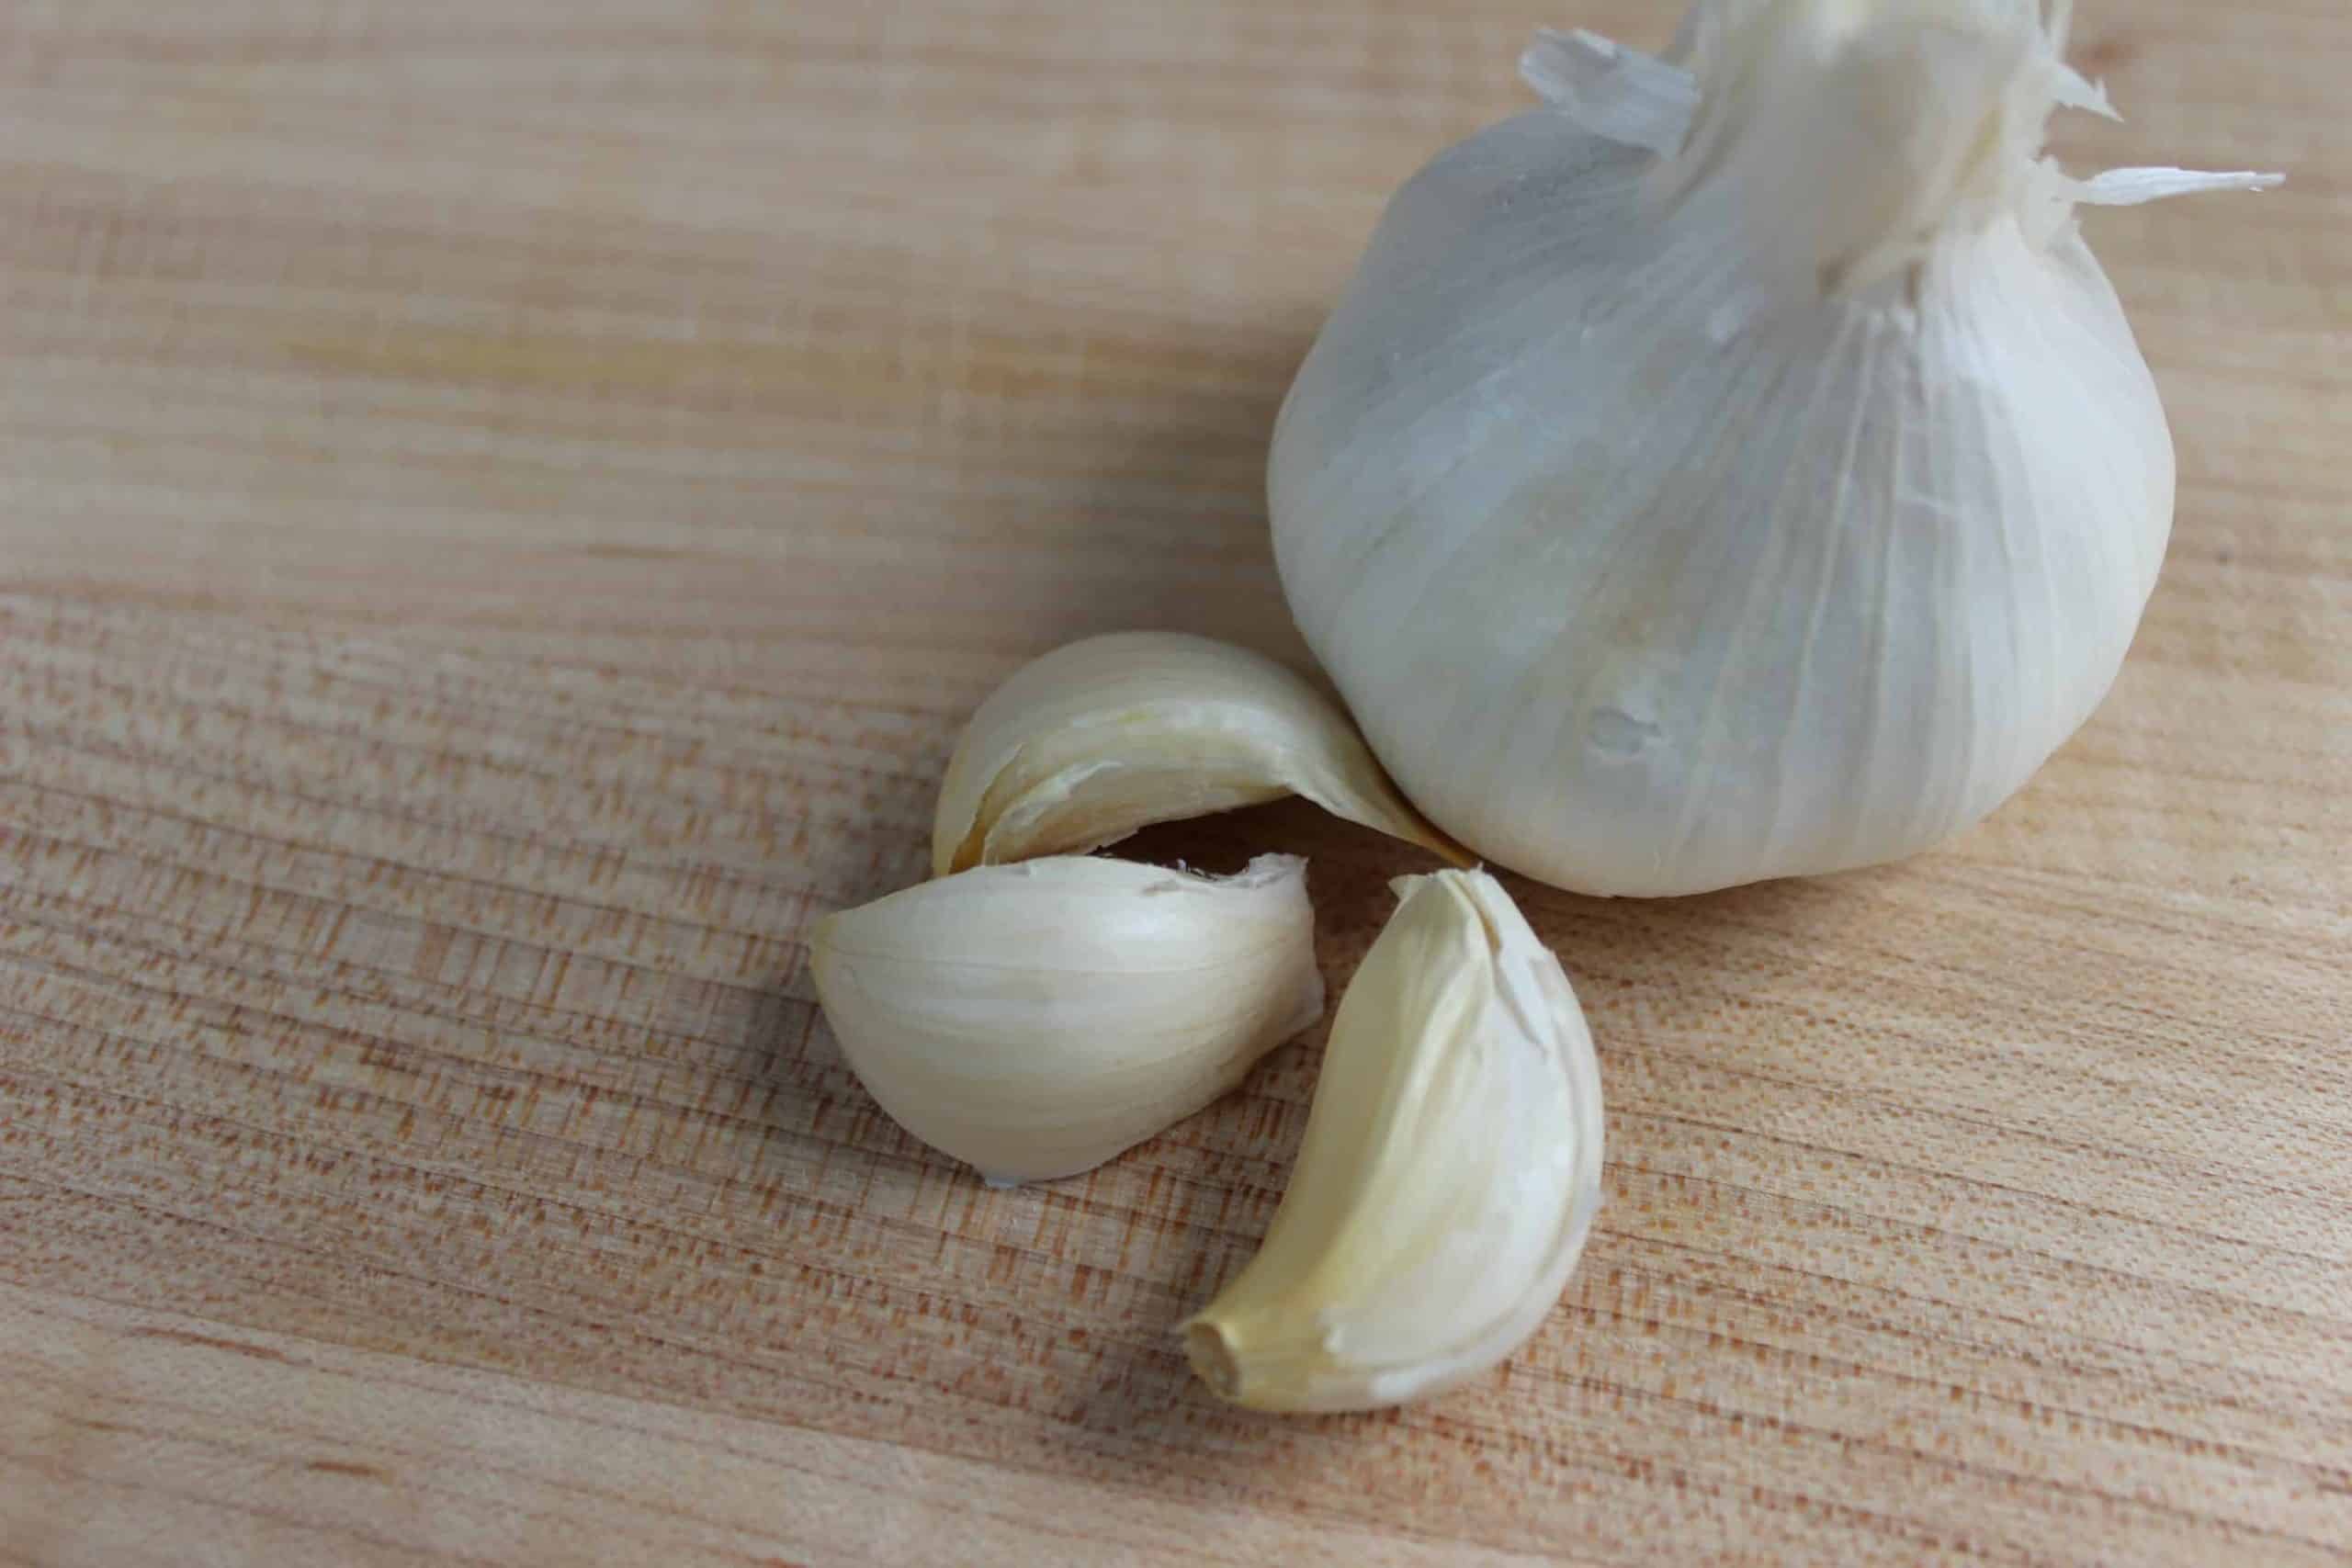 How To: Saute Garlic